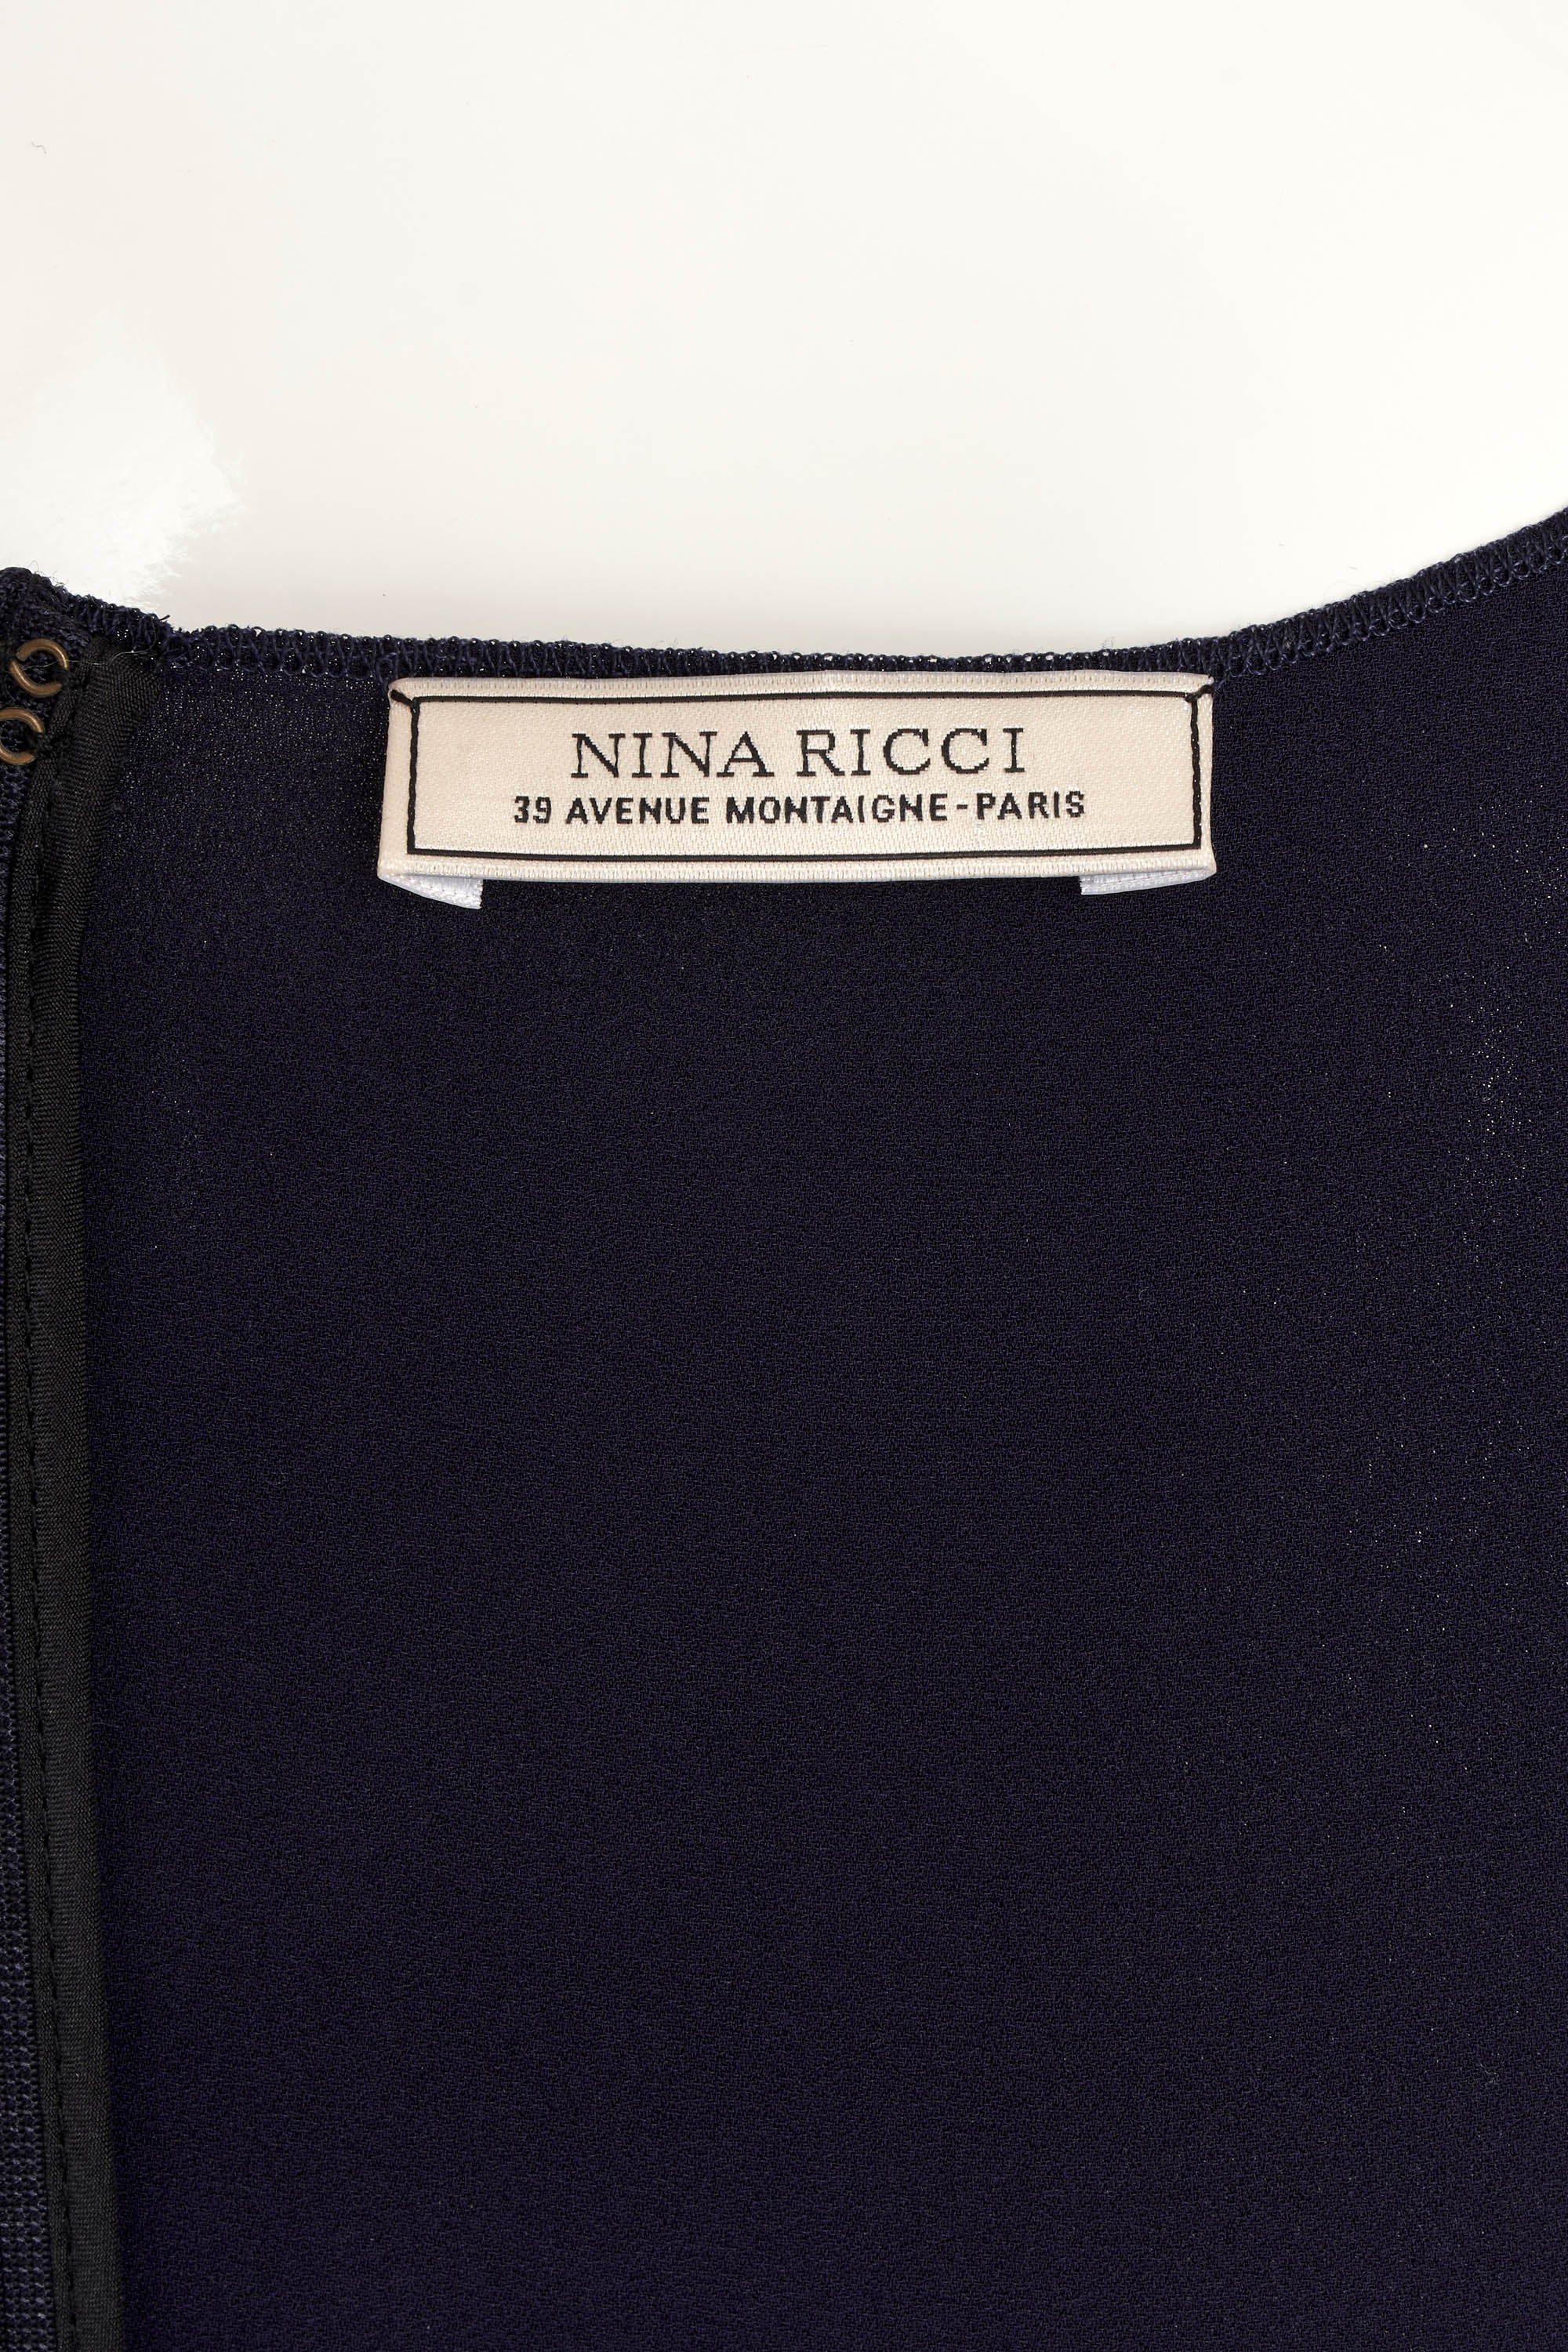 Nina Ricci Navy and Black Silk Dress Size 38